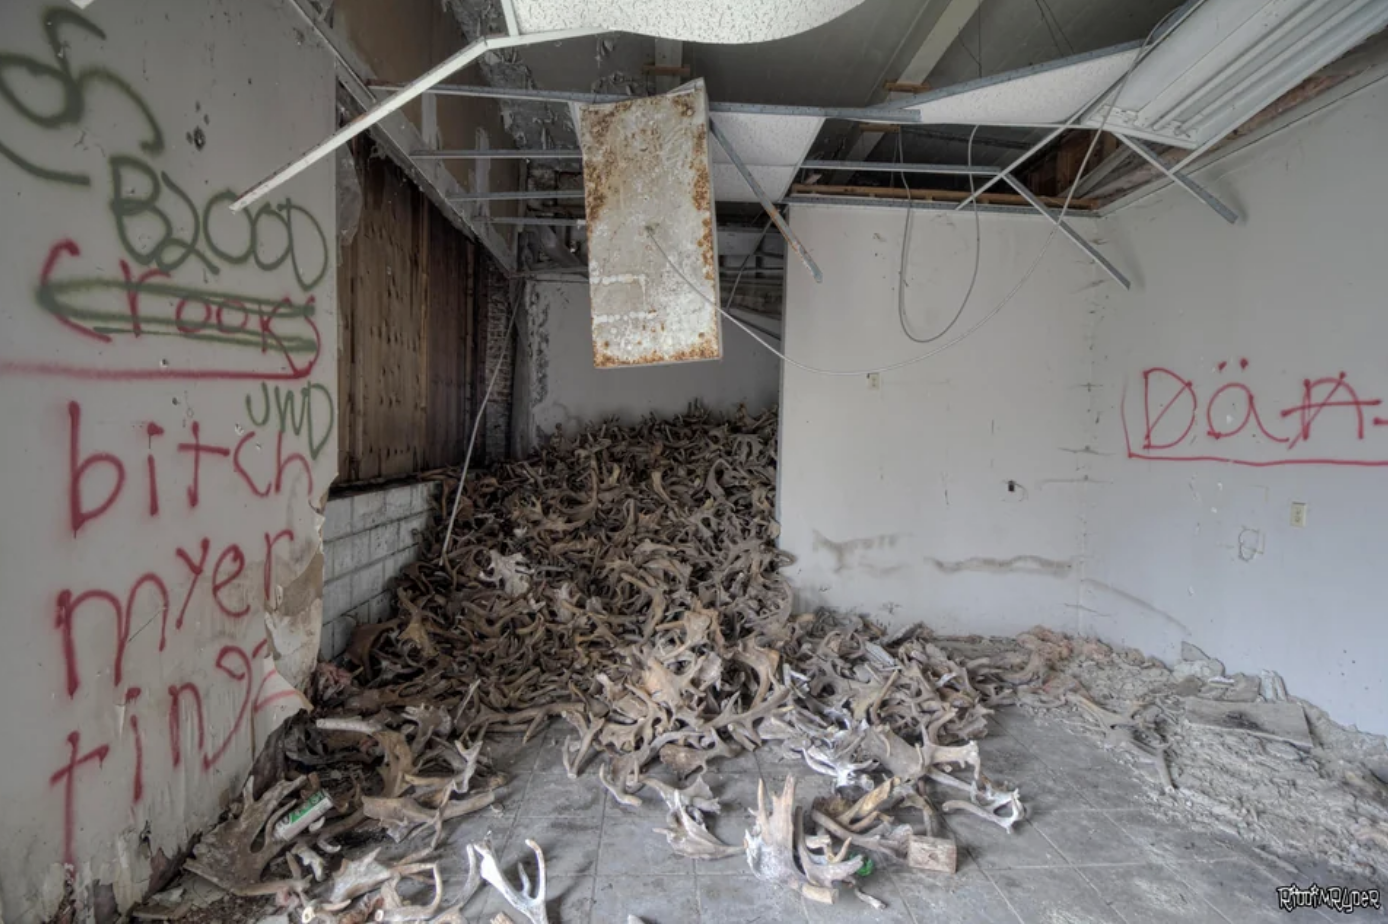 Bones in an abandoned building